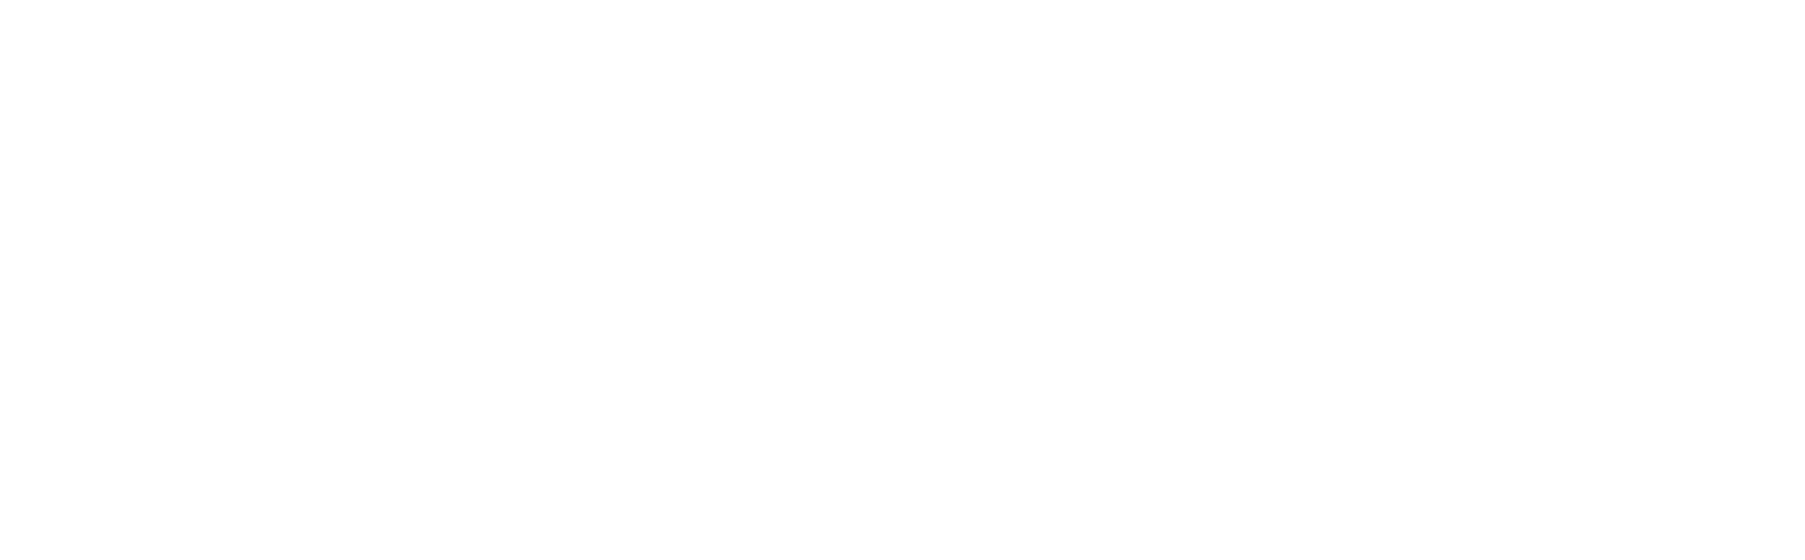 Key Carbon Ltd.